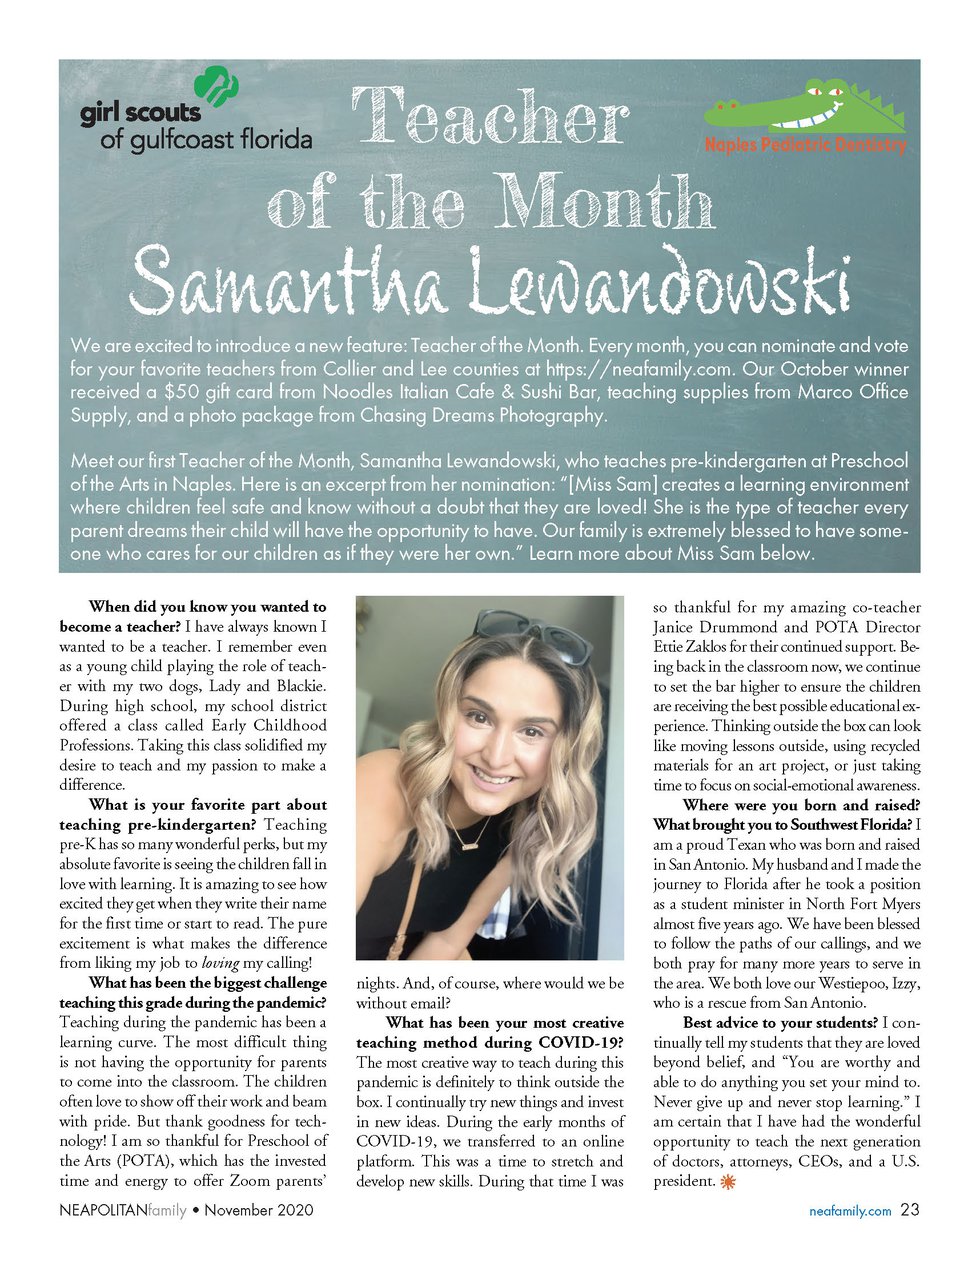 Teacher of the Month: Samantha Lewandowski